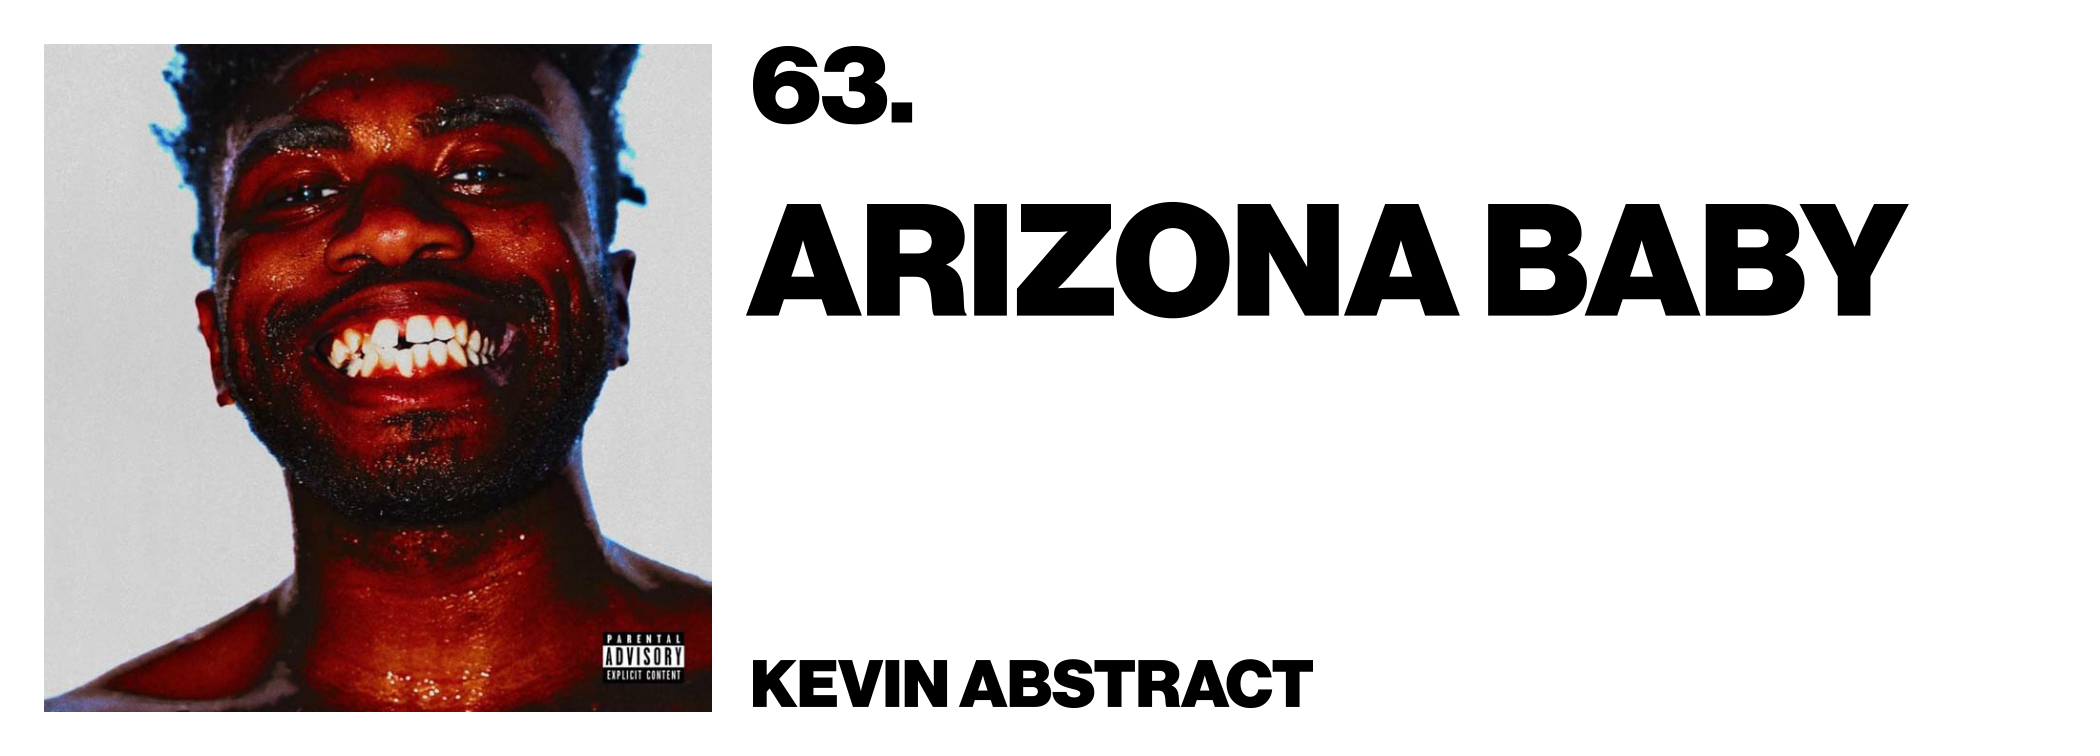 1576074243966-63-Kevin-Abstract-Arizona-Baby